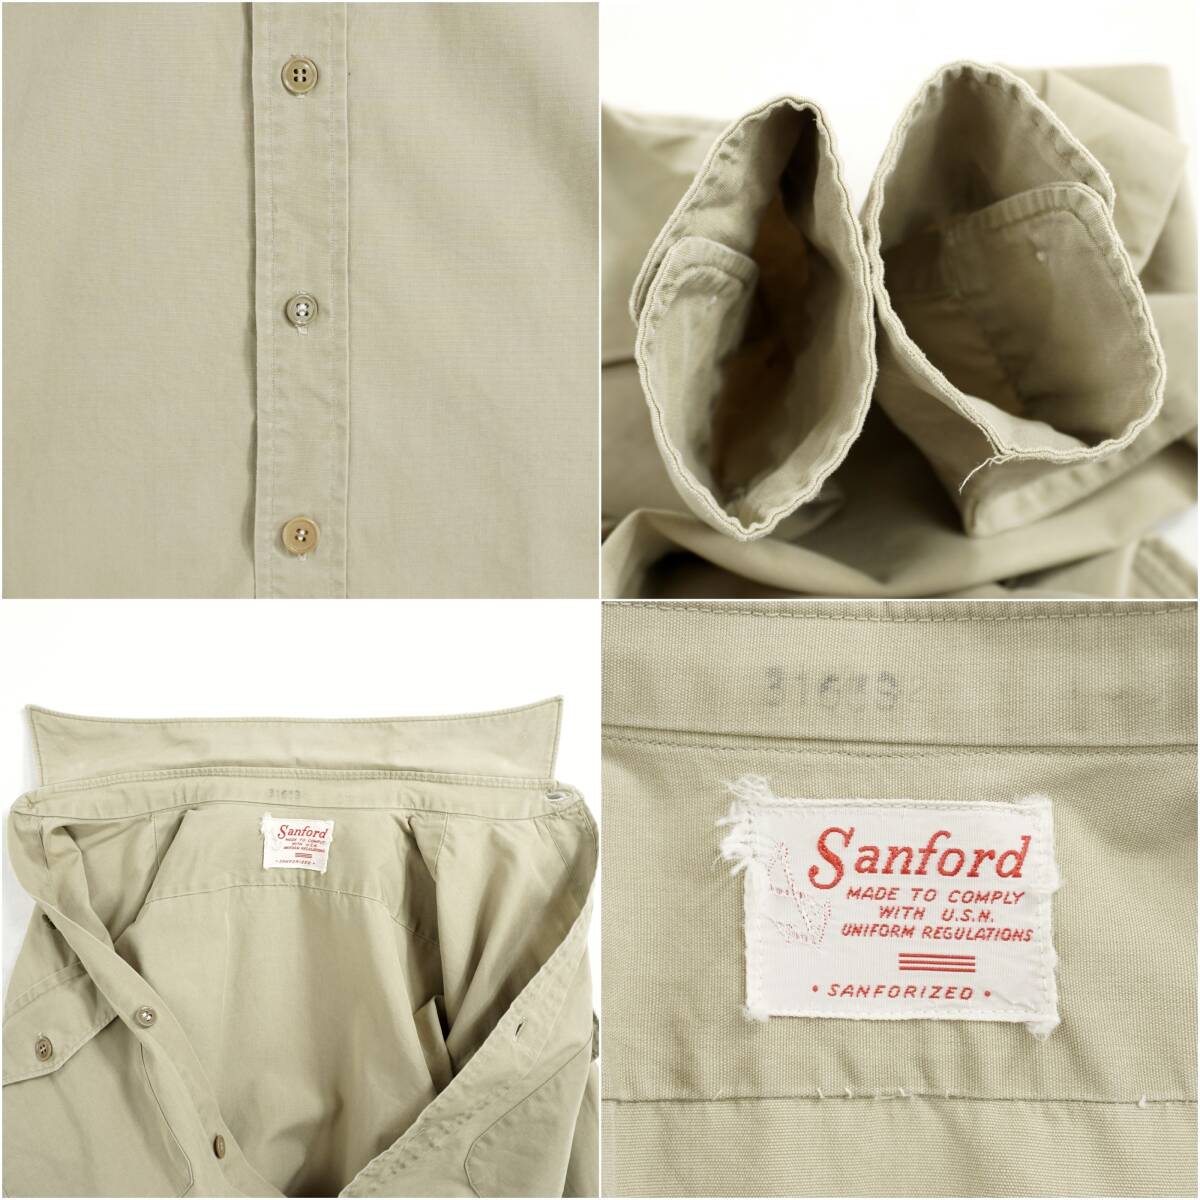 US NAVY Sanford Cotton Khaki Shirts 1950s SH24007 Vintage アメリカ海軍 コットンカーキシャツ シャツ 1950年代 ヴィンテージ_画像10